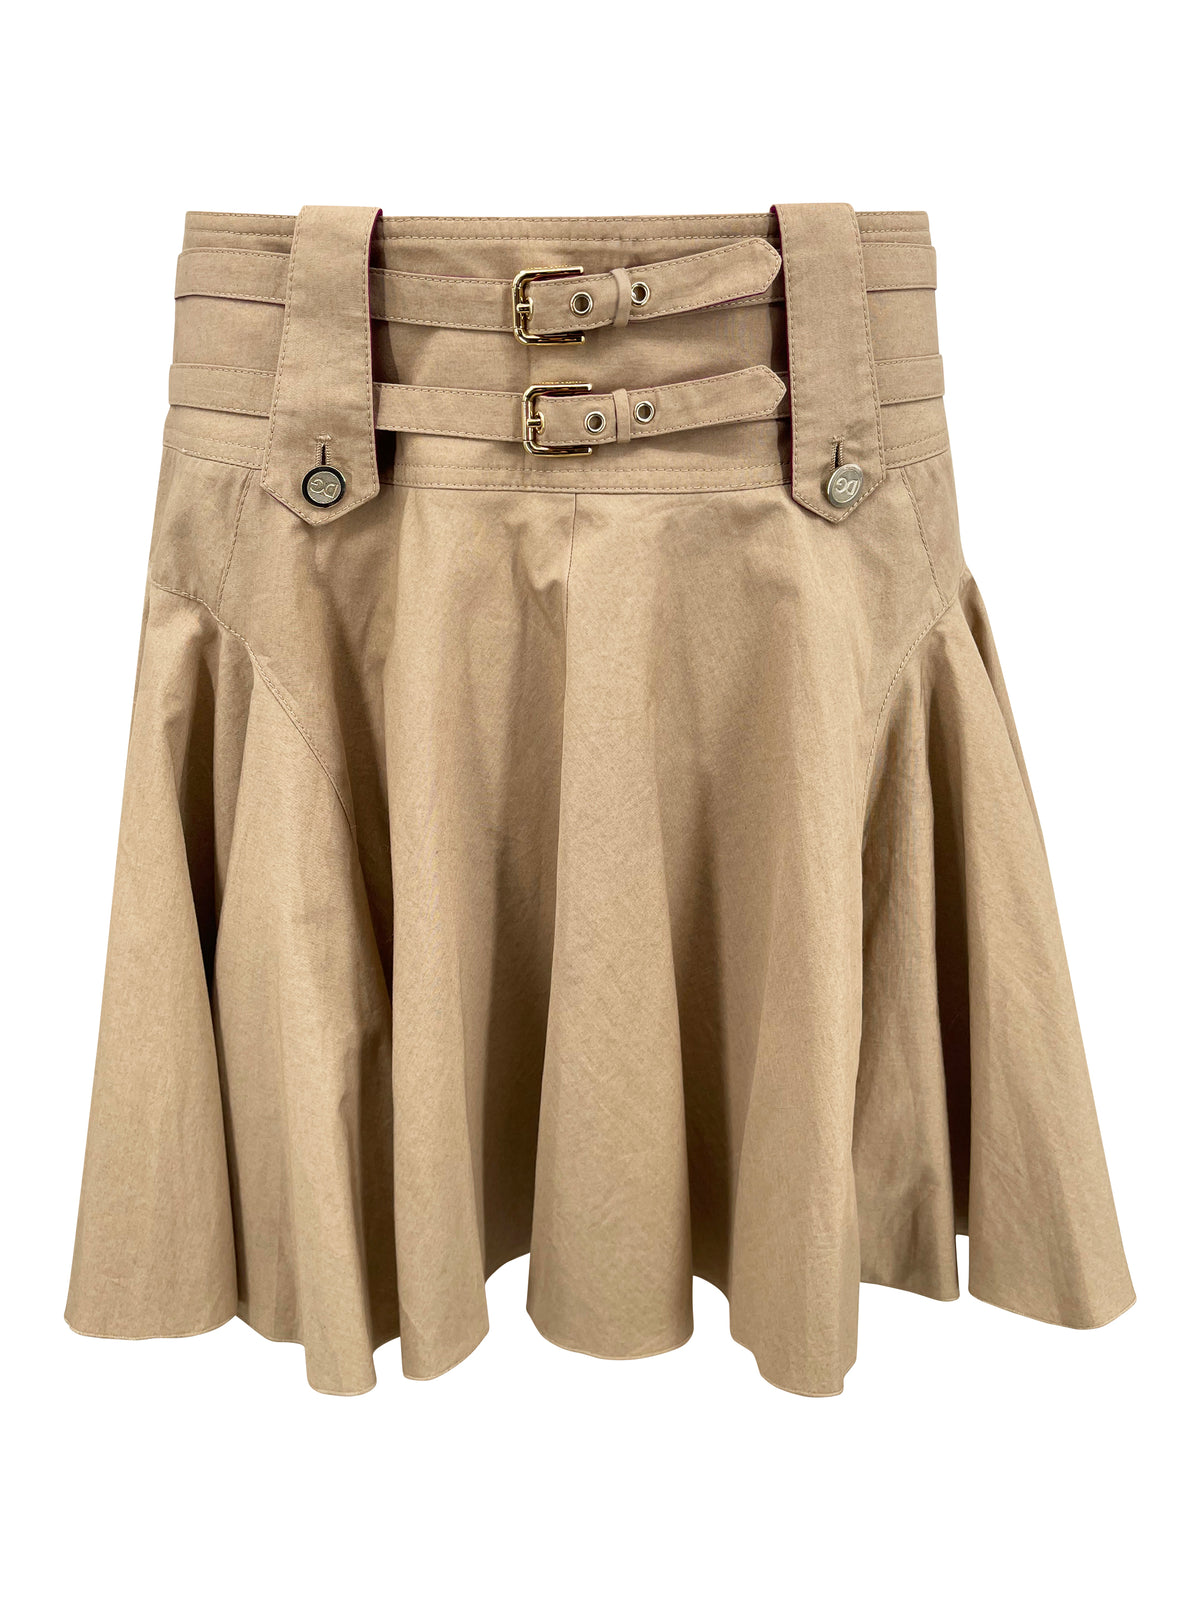 Vintage Dolce & Gabbana Beige Pleated Cotton Skirt - ONFEMME By Lindsey's Kloset